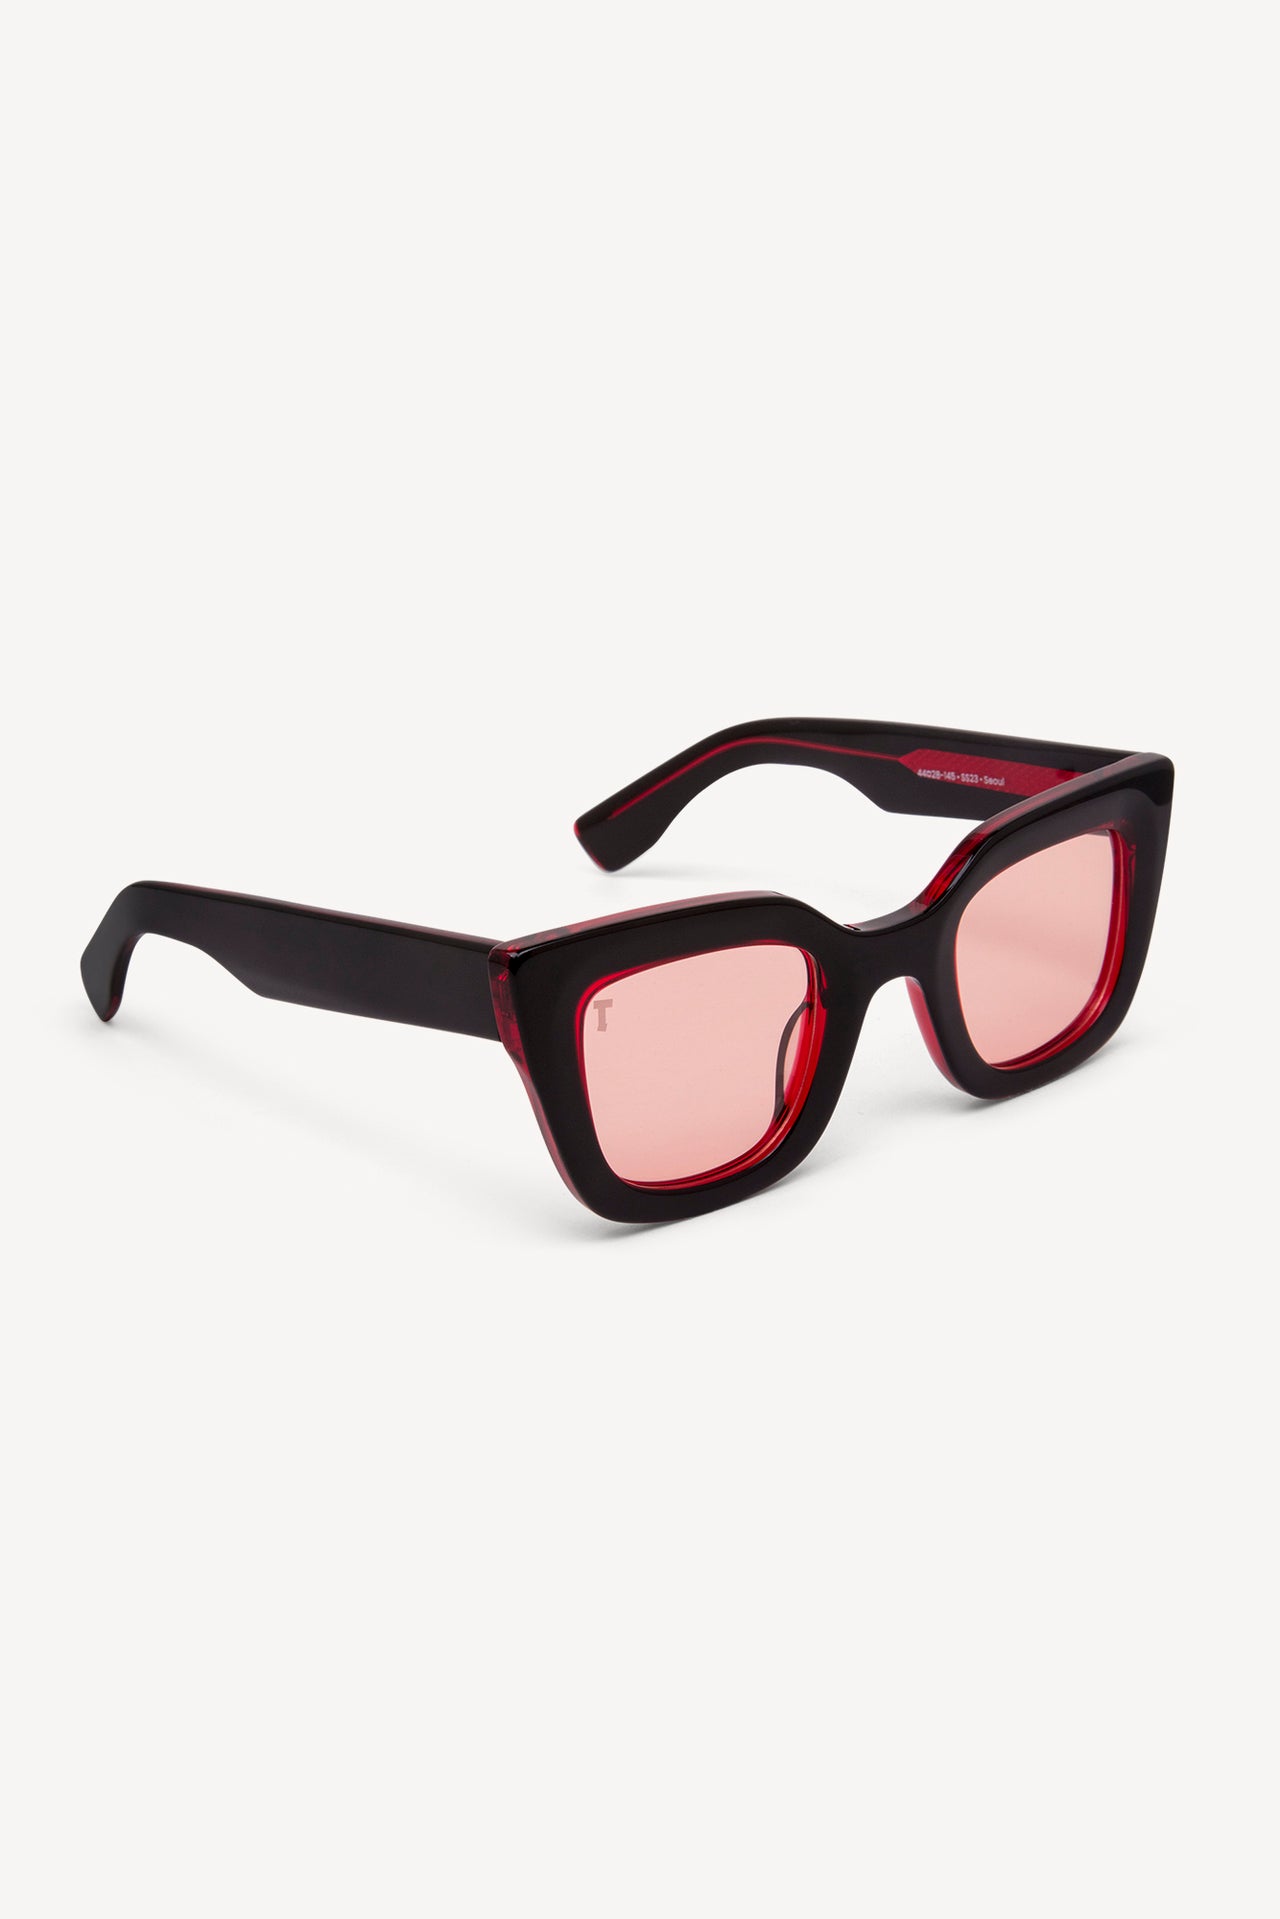 TOATIE Seoul Cat Eye Sunglasses BLACK-RED/PINK